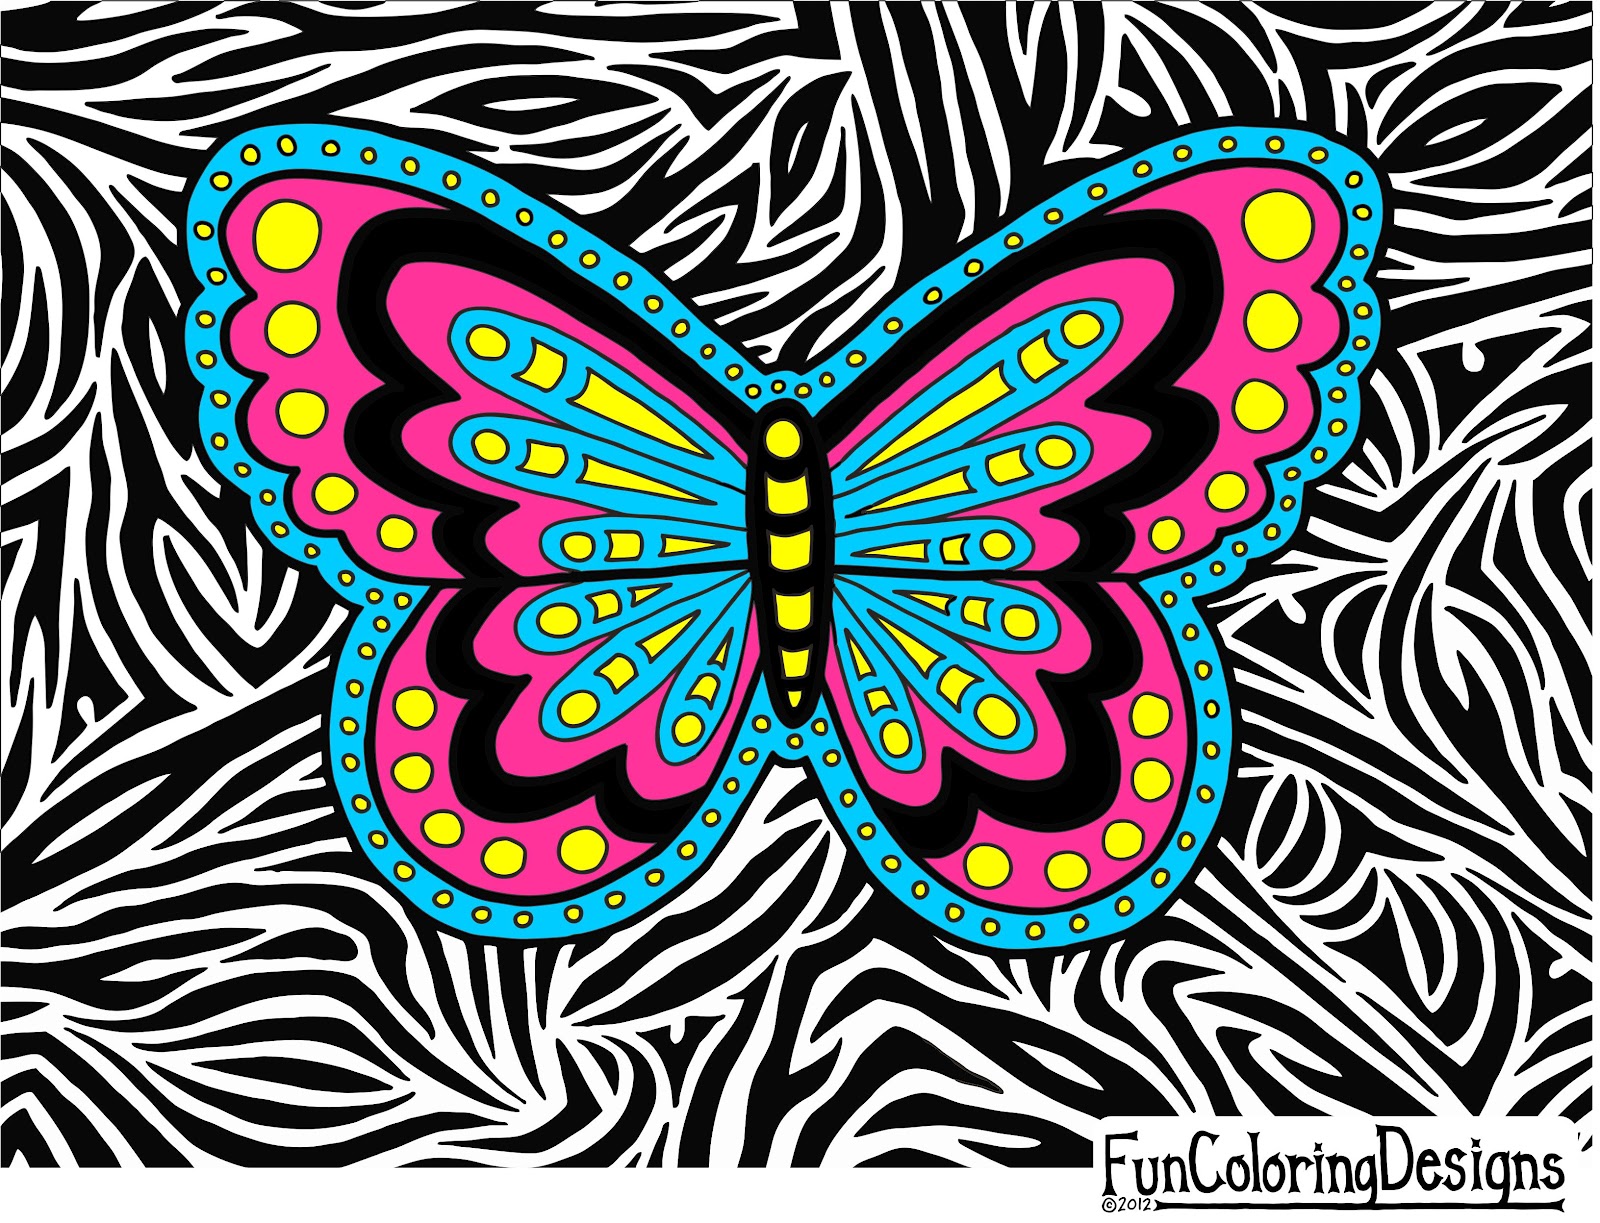 Colorful Zebra Print Wallpaper Clipart Best